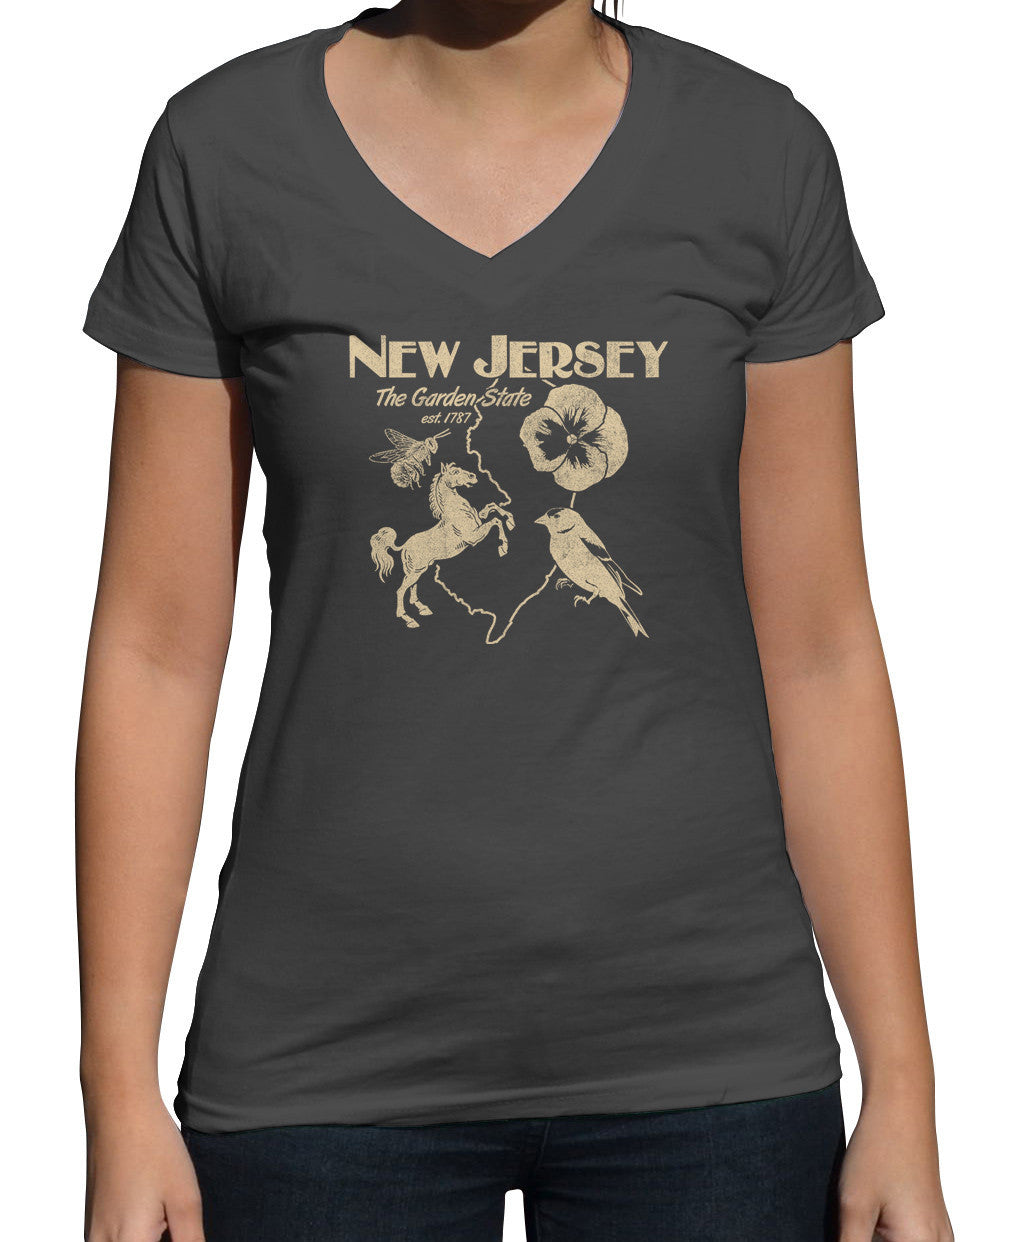 Women's New Jersey Vneck T-Shirt Retro Garden State